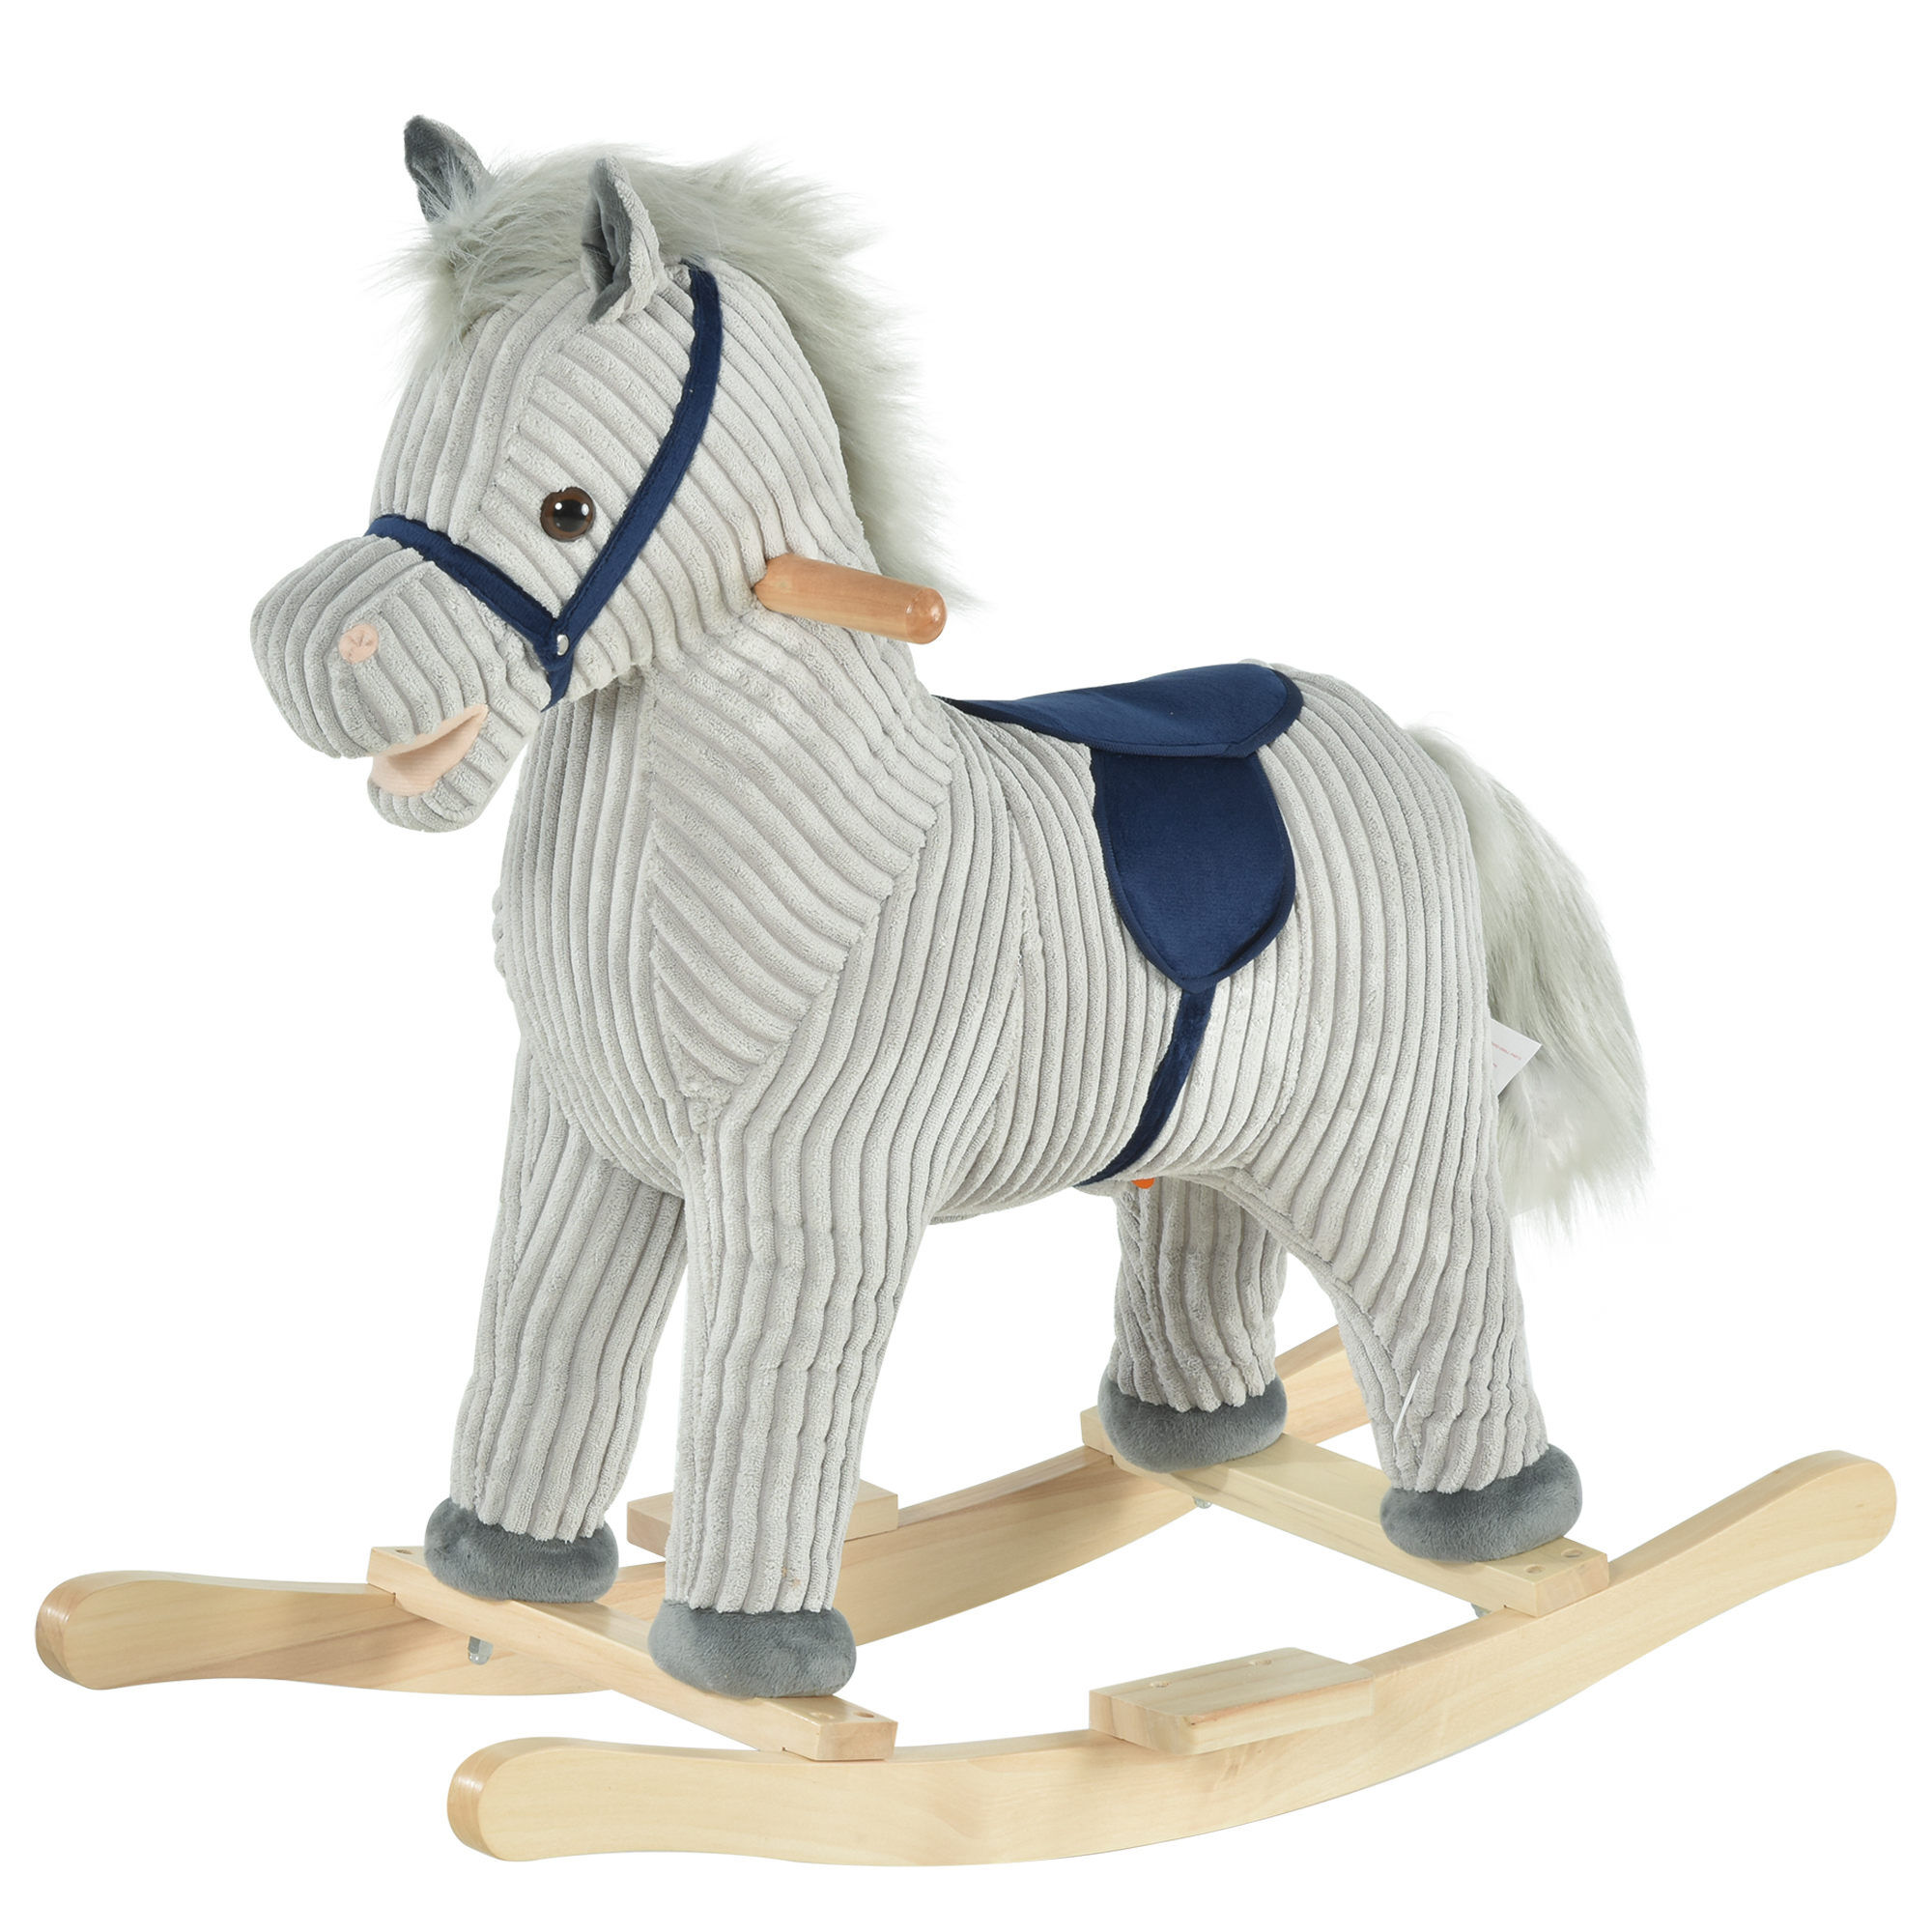 Qaba Kids Rocking Horse, Plush Baby Ride on Horse Toddler Rocker for 36-72 Months, Boys Girls Gift, Gray/White